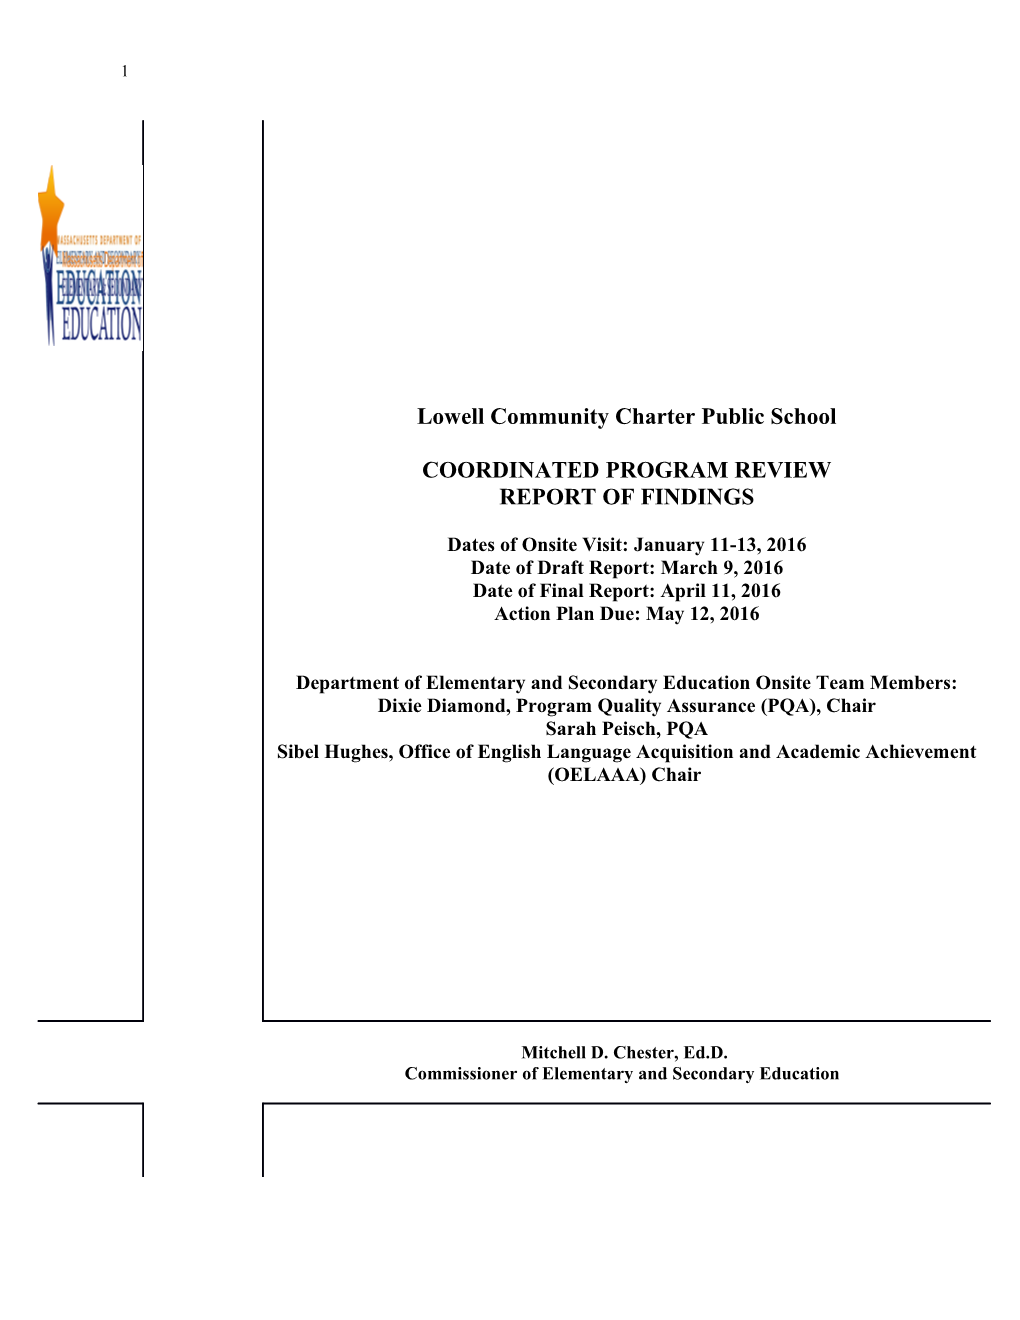 Lowell Community Charter School CPR Final Report 2016